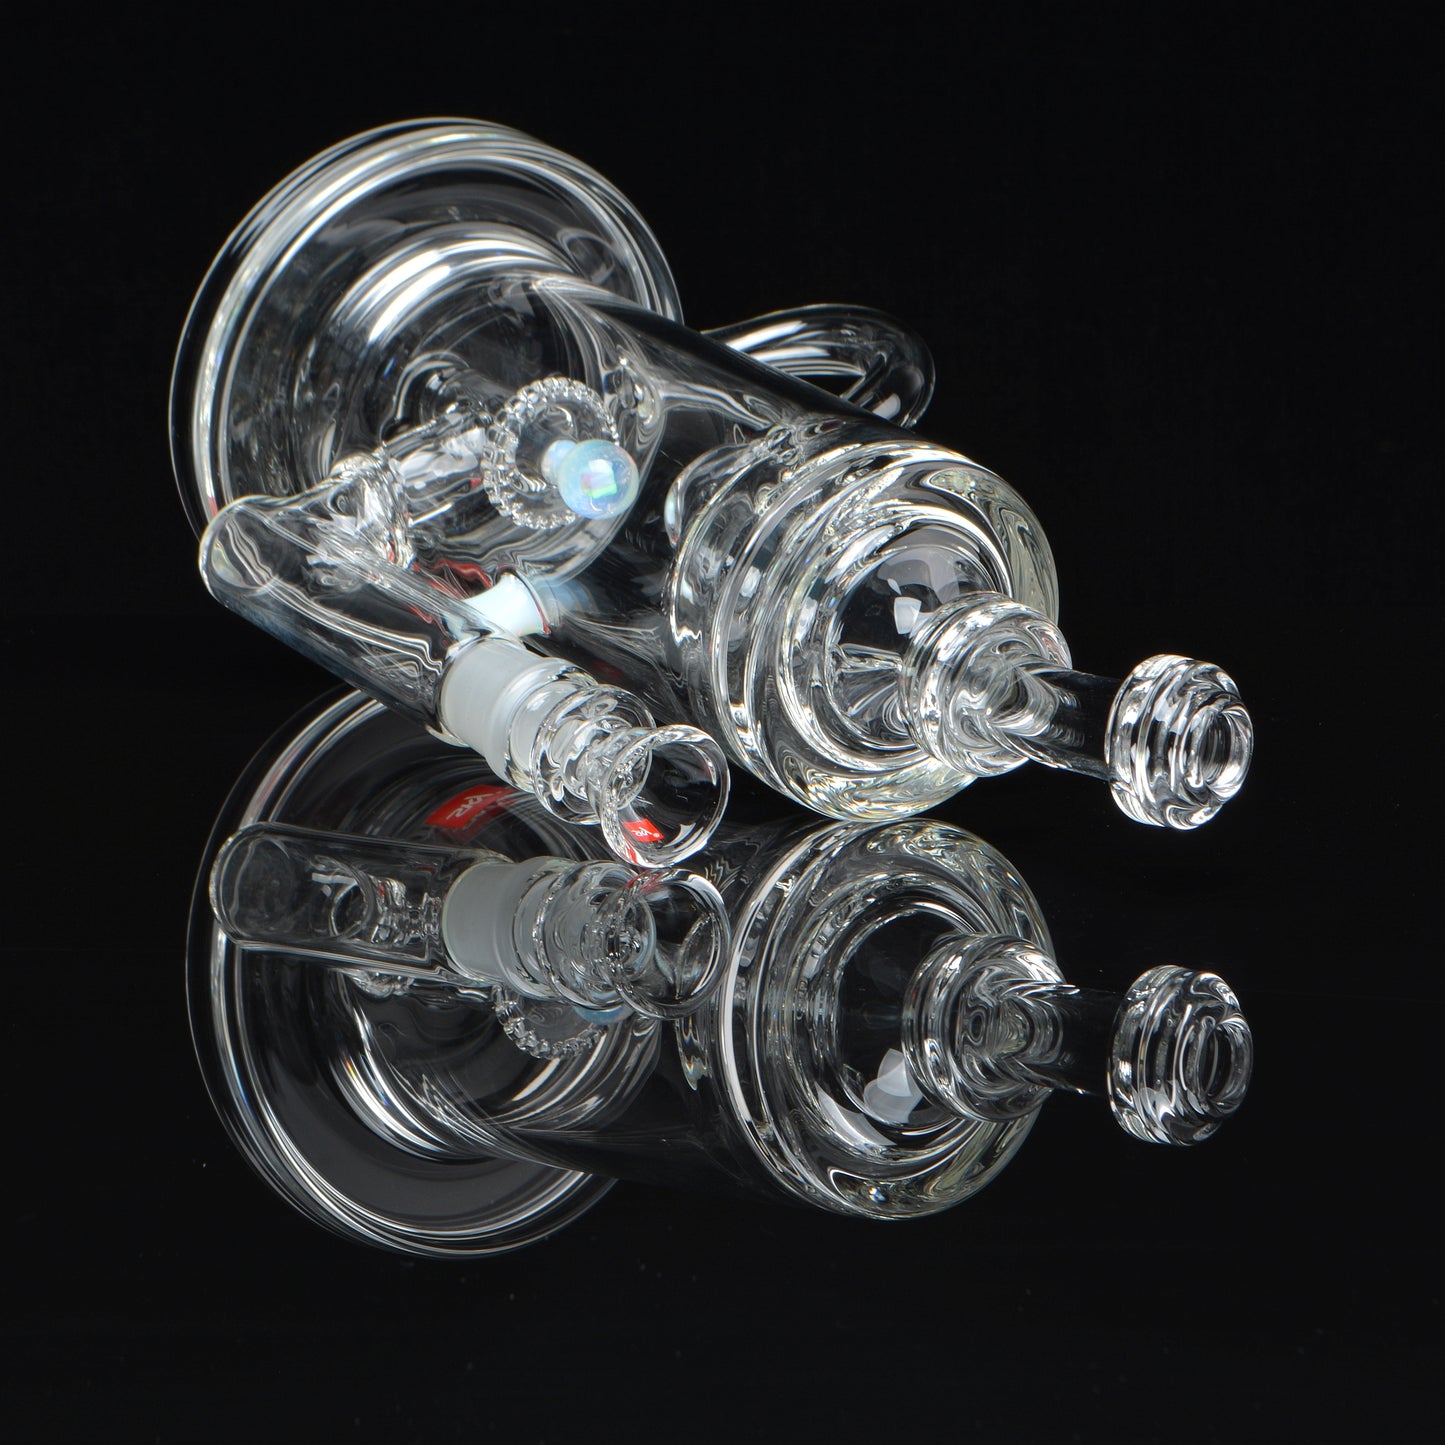 18mm Quantum Klein Recycler reflective shot